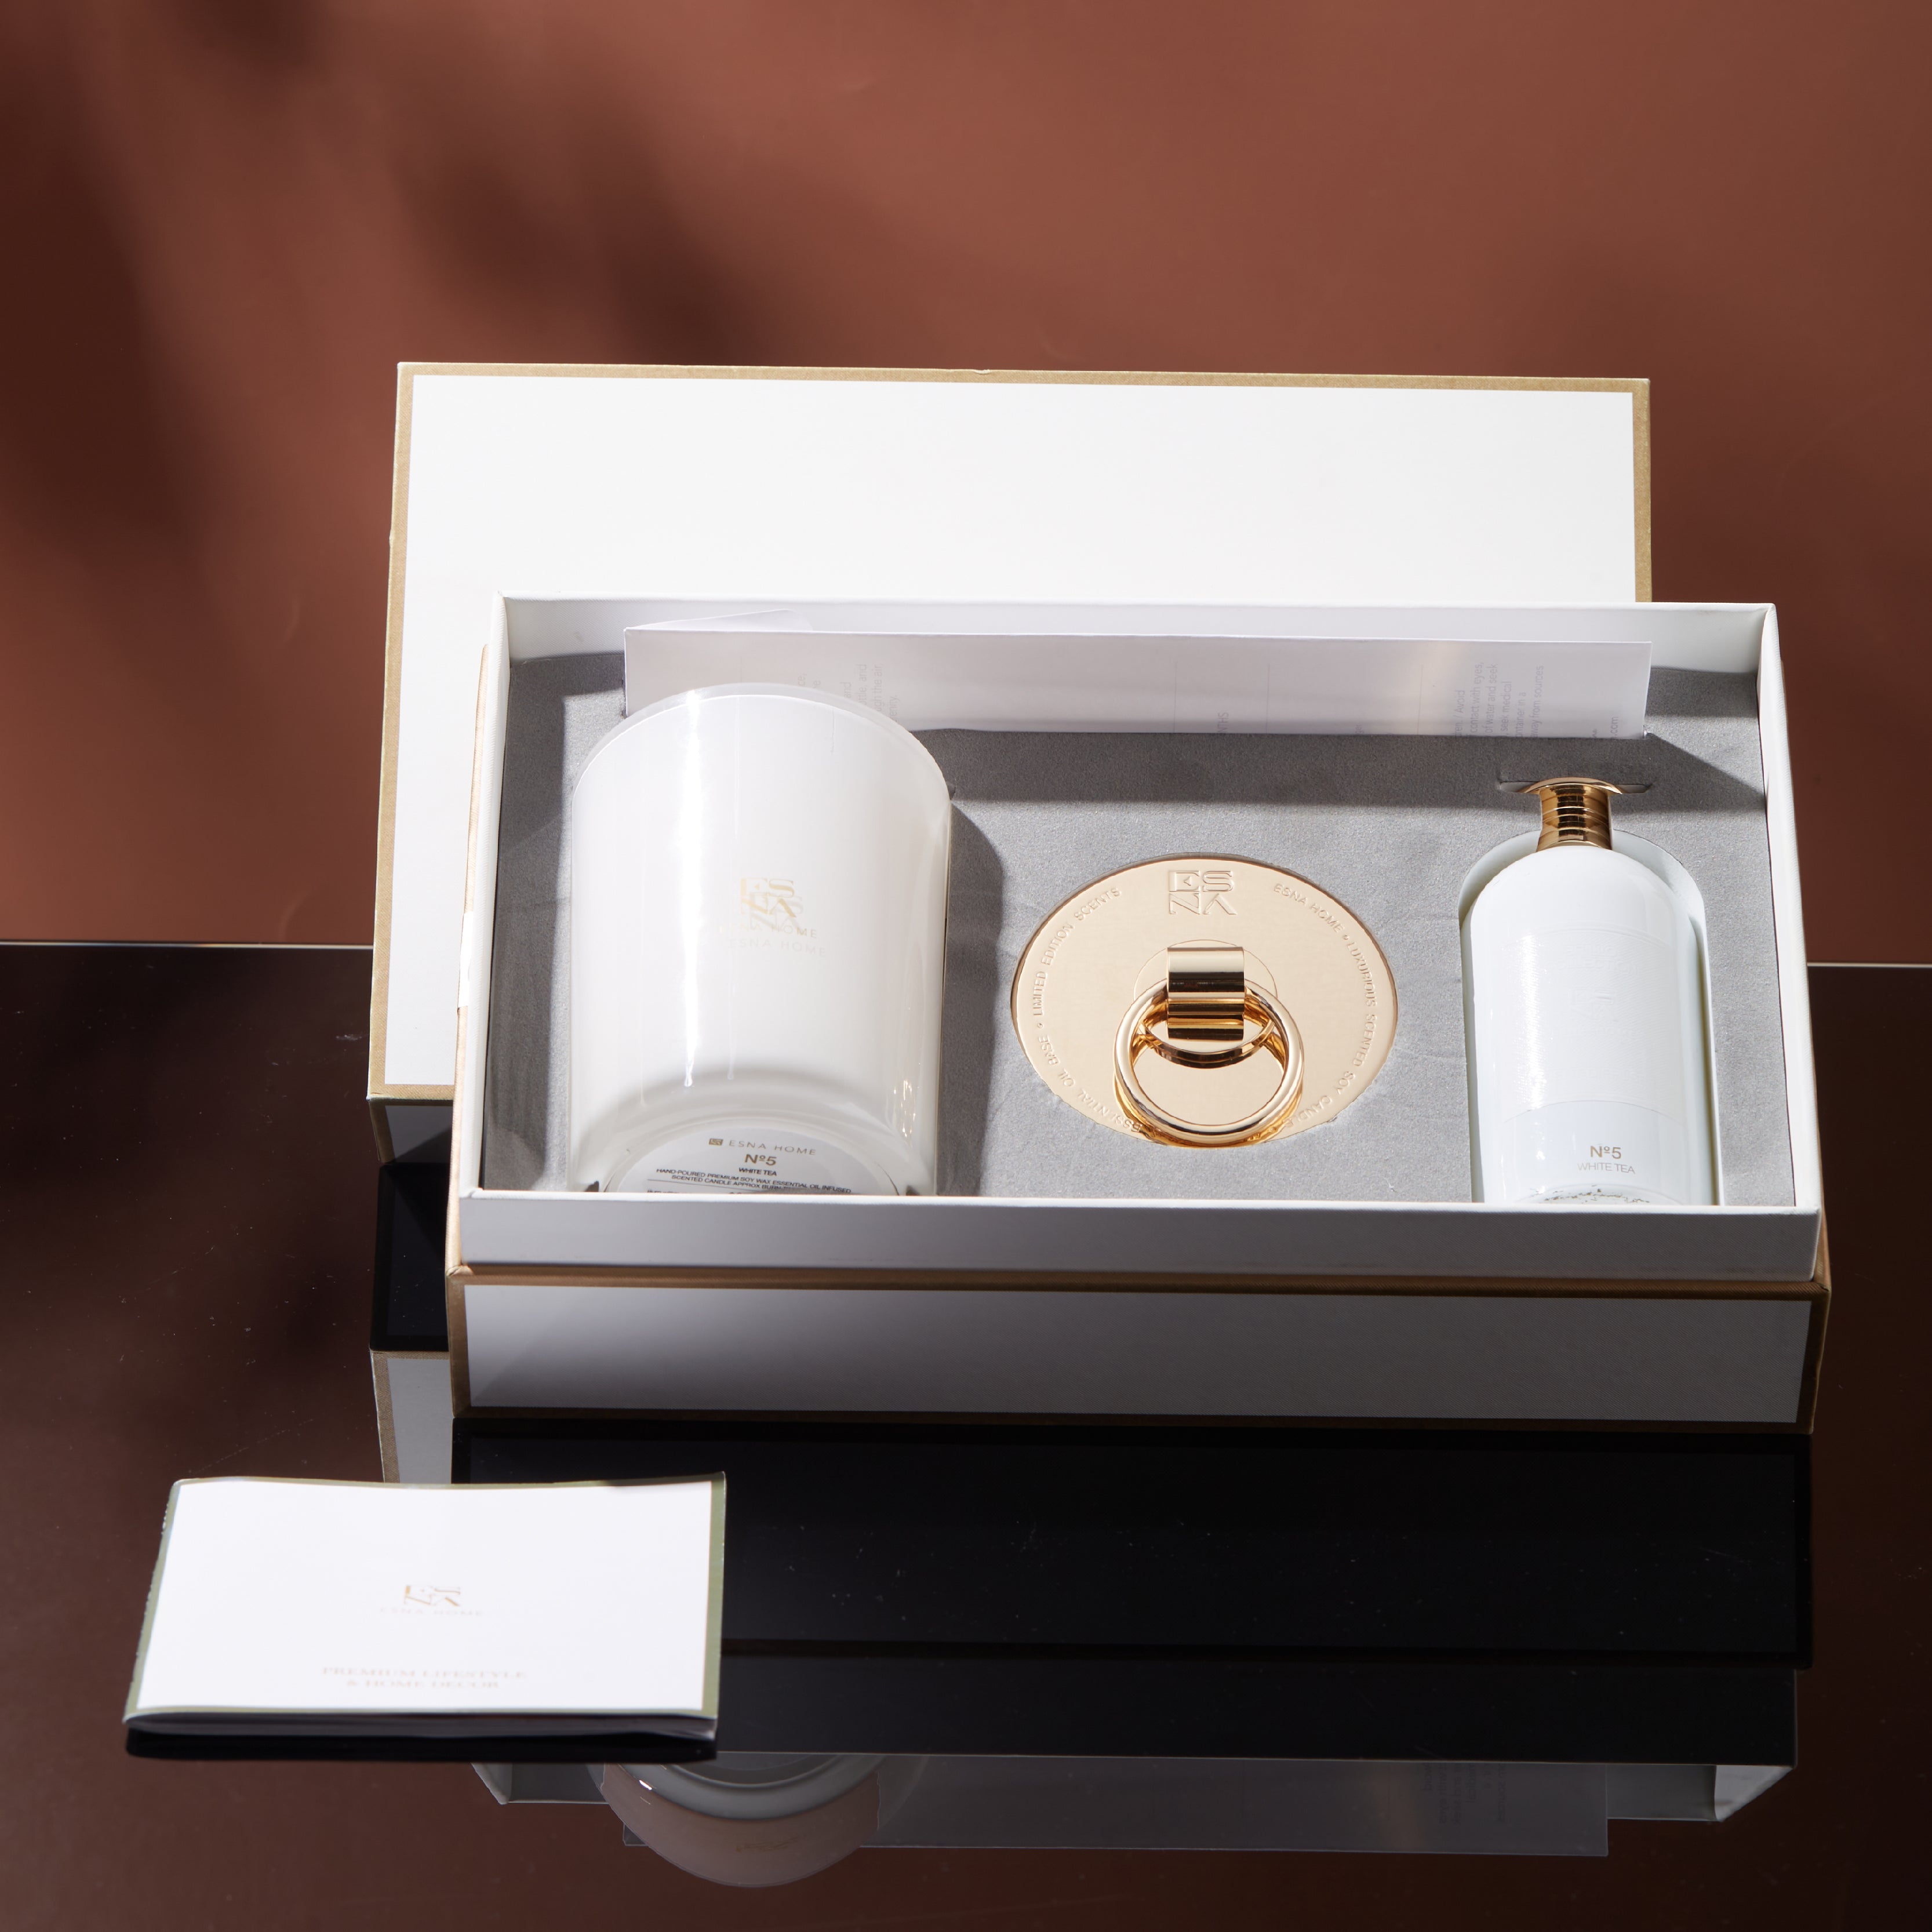 3.5 Fl Oz 100ml Fragrance Oil White Tea Scented Candle Gift Set